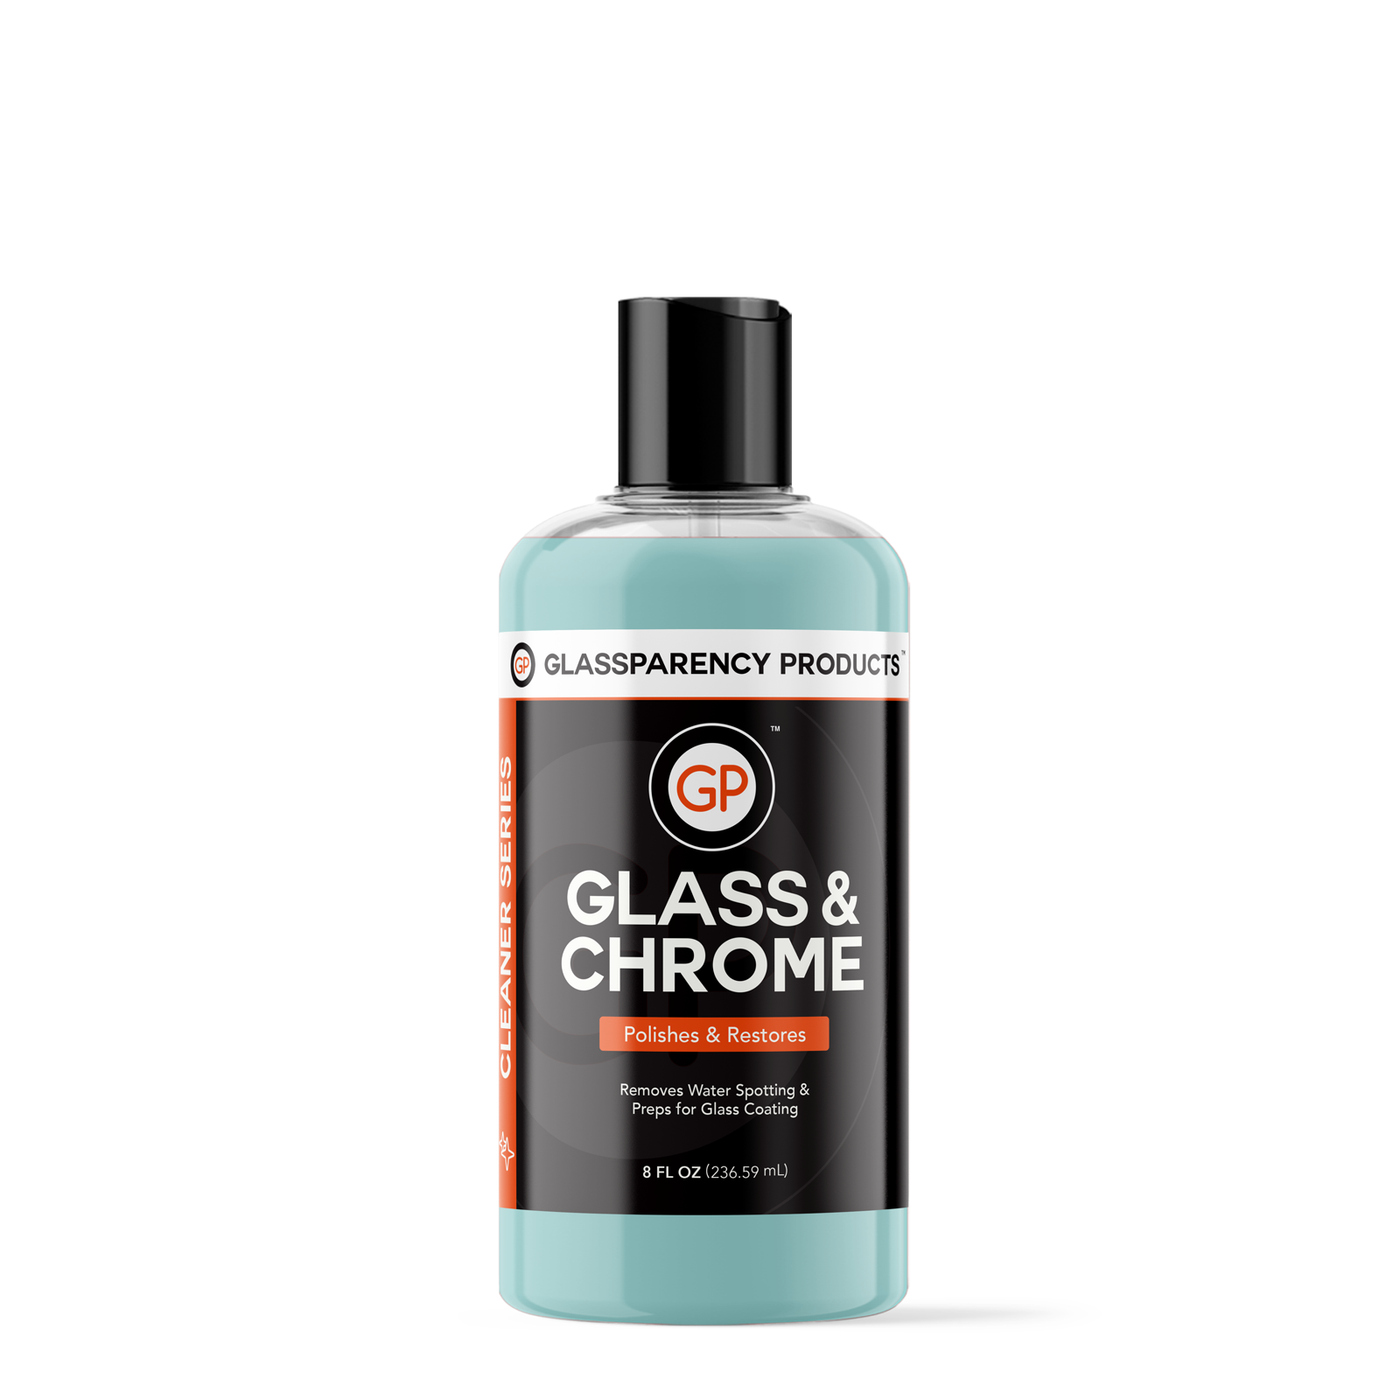 Glass & Chrome Polish – GlassParency